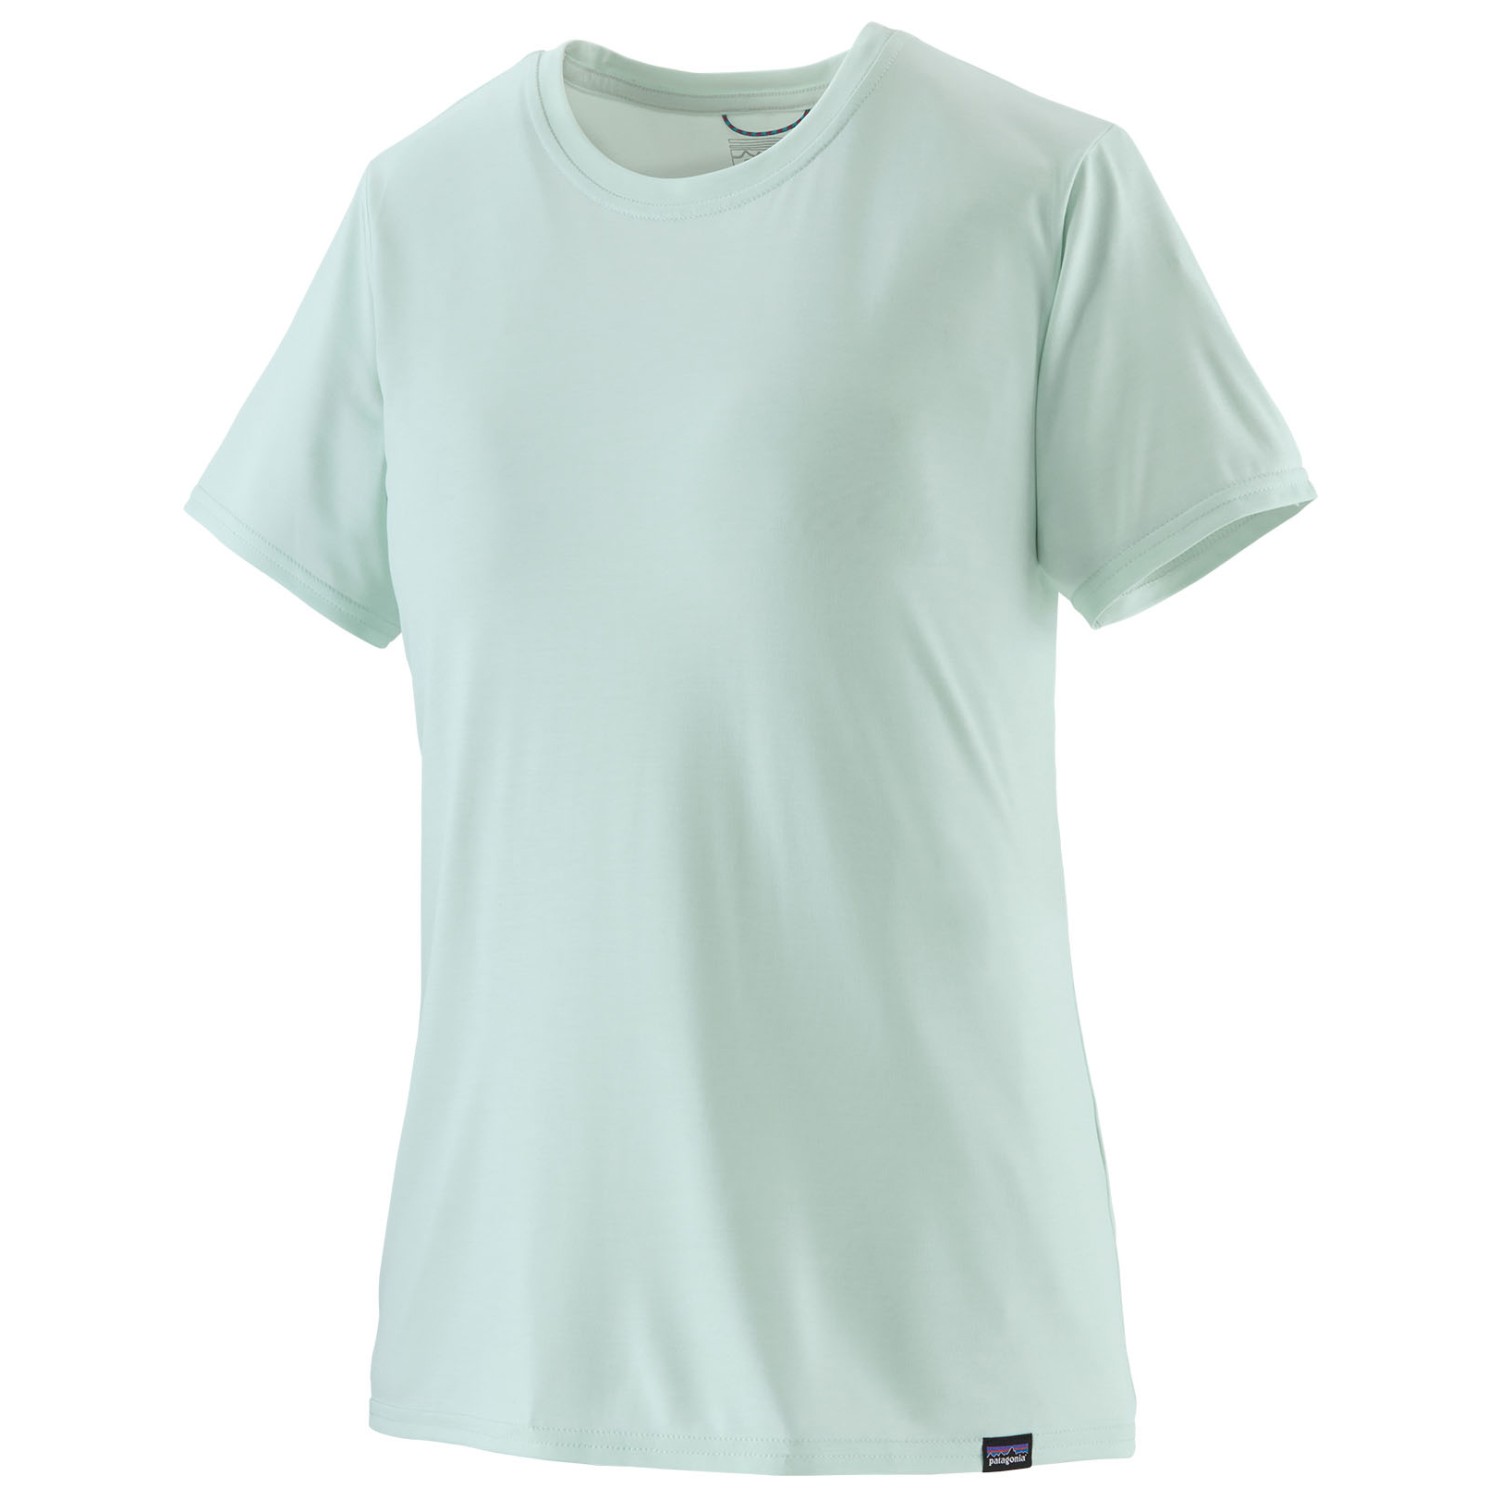 Функциональная рубашка Patagonia Women's Cap Cool Daily Shirt, цвет Wispy Green/Light Wispy Green X Dye